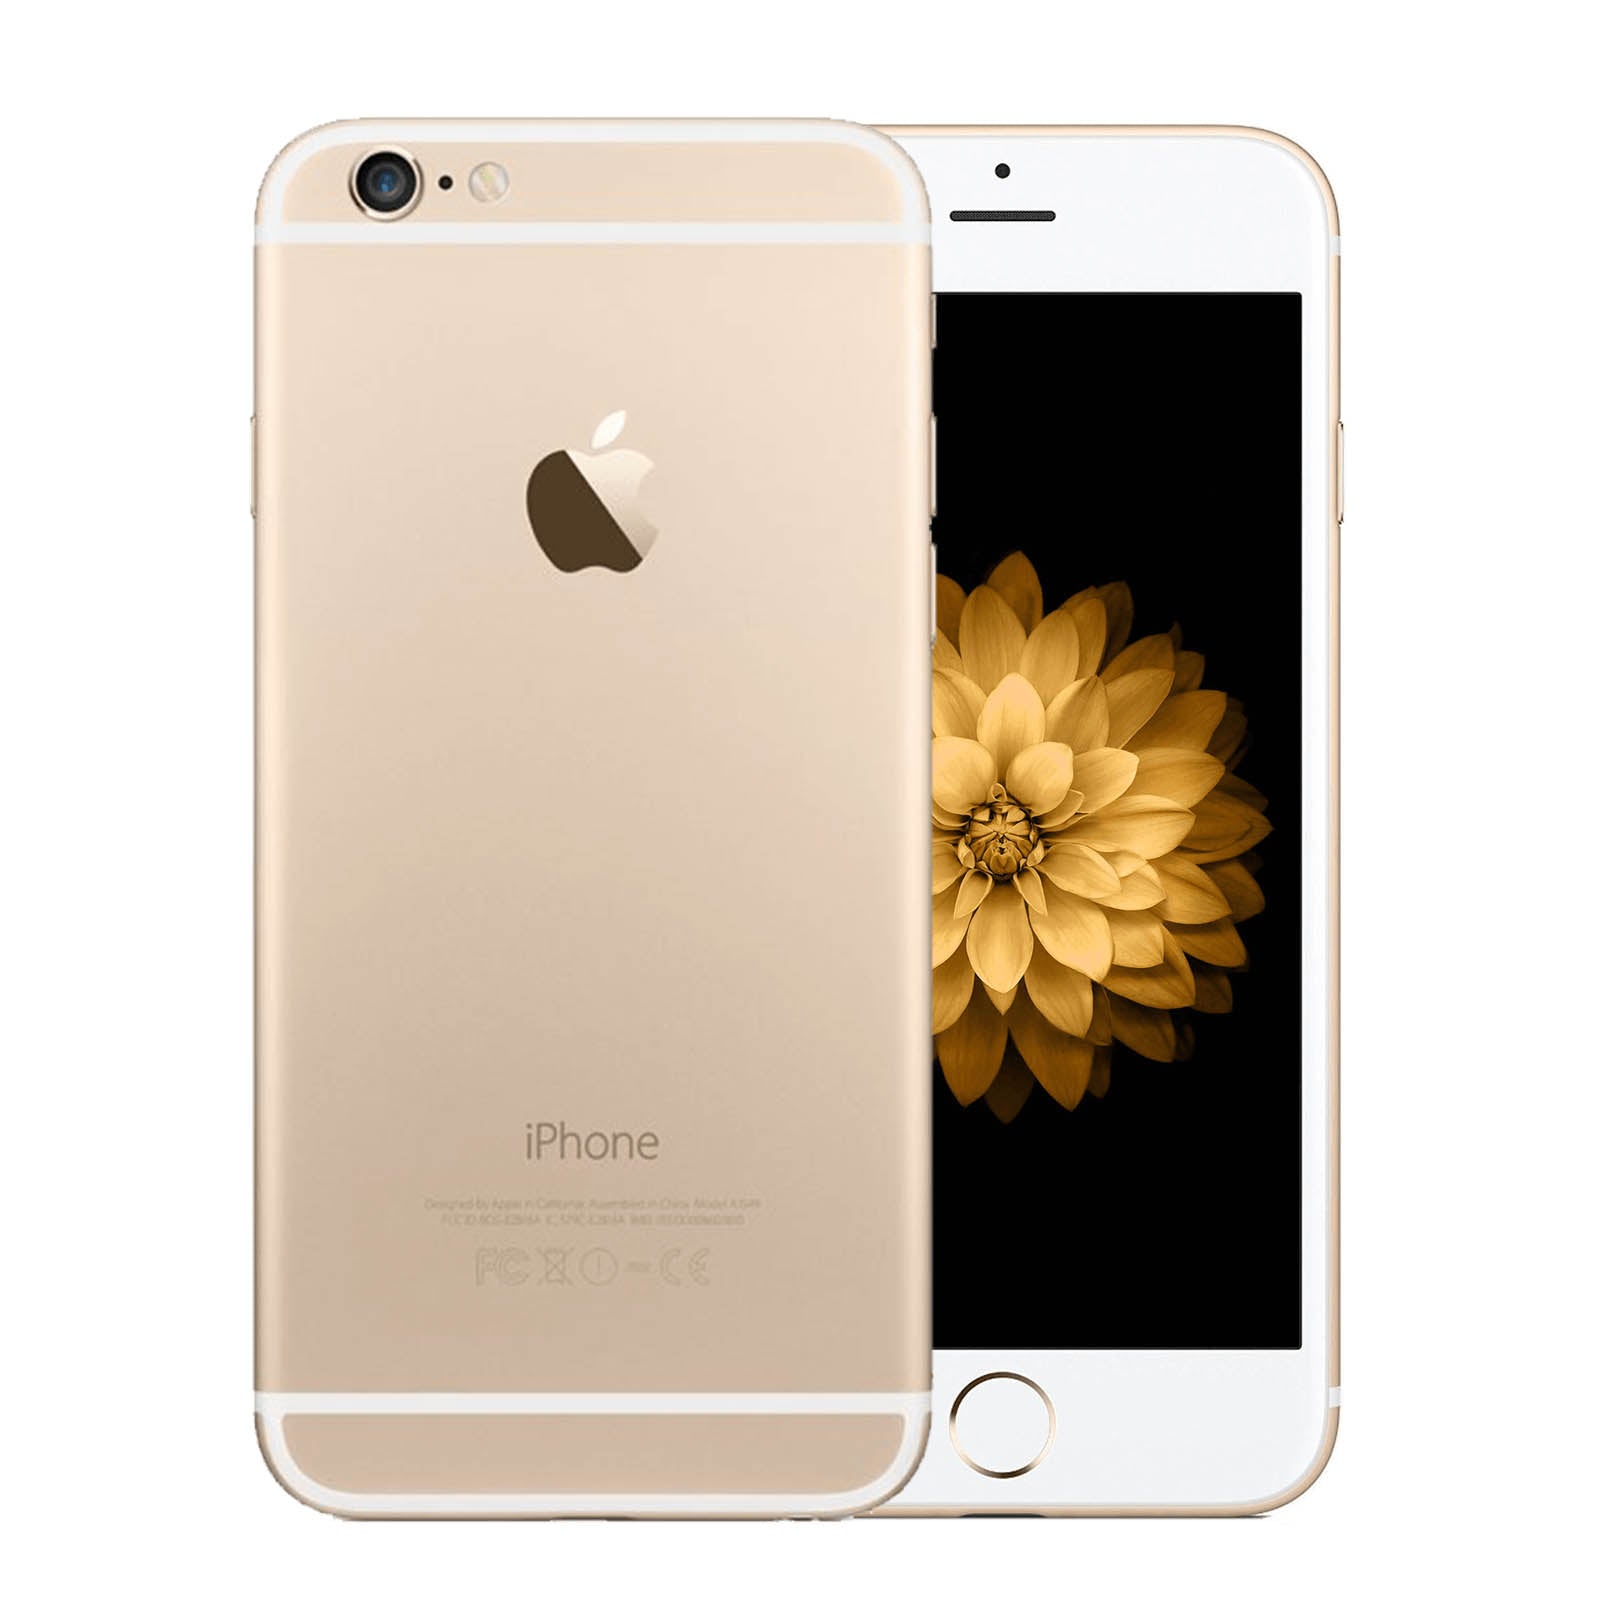 Apple iPhone 6 64GB Gold Good - Unlocked